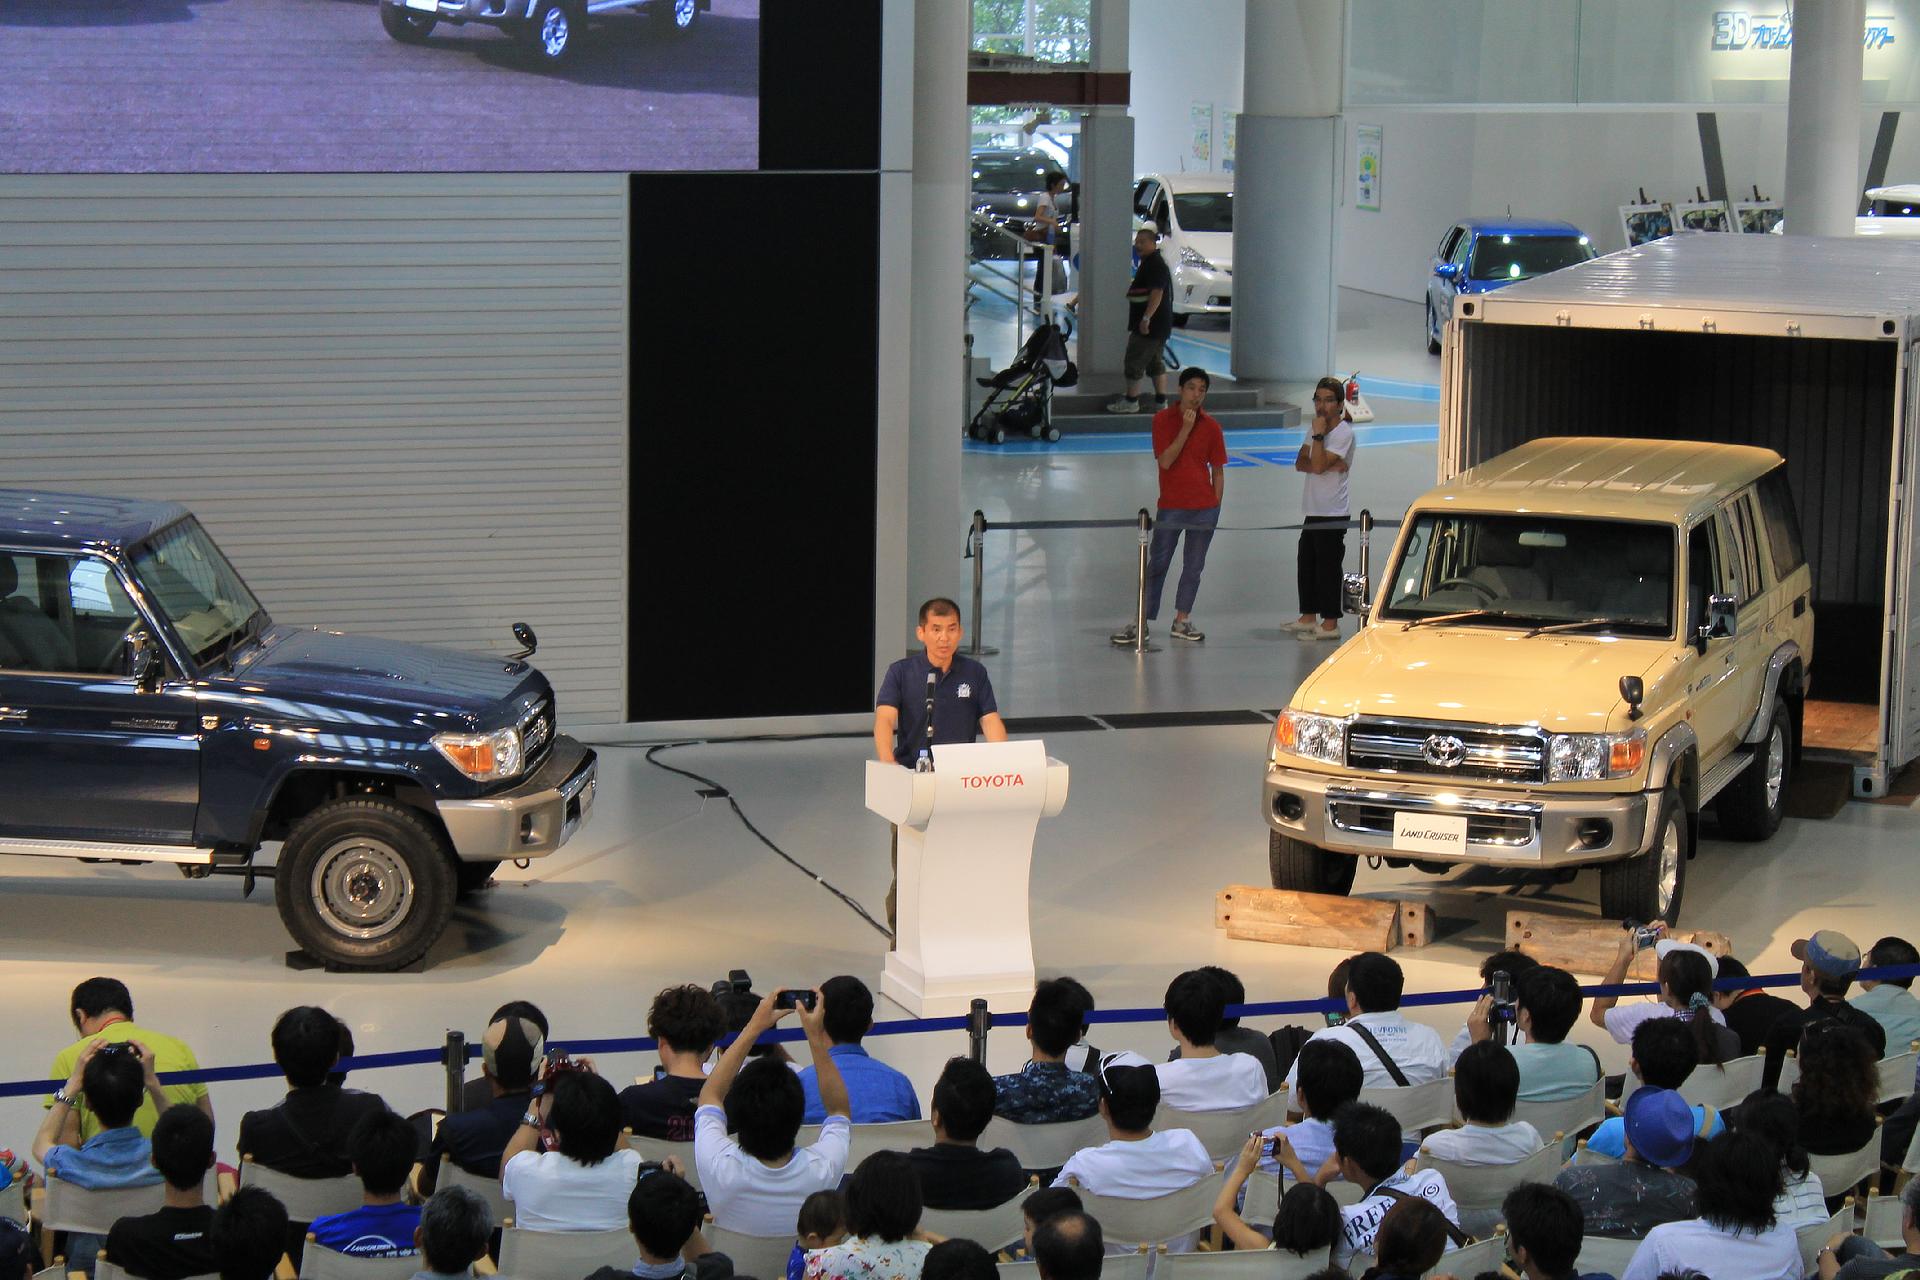 Presentation by Land Cruiser 70 Chief Engineer Sadayoshi Koyari